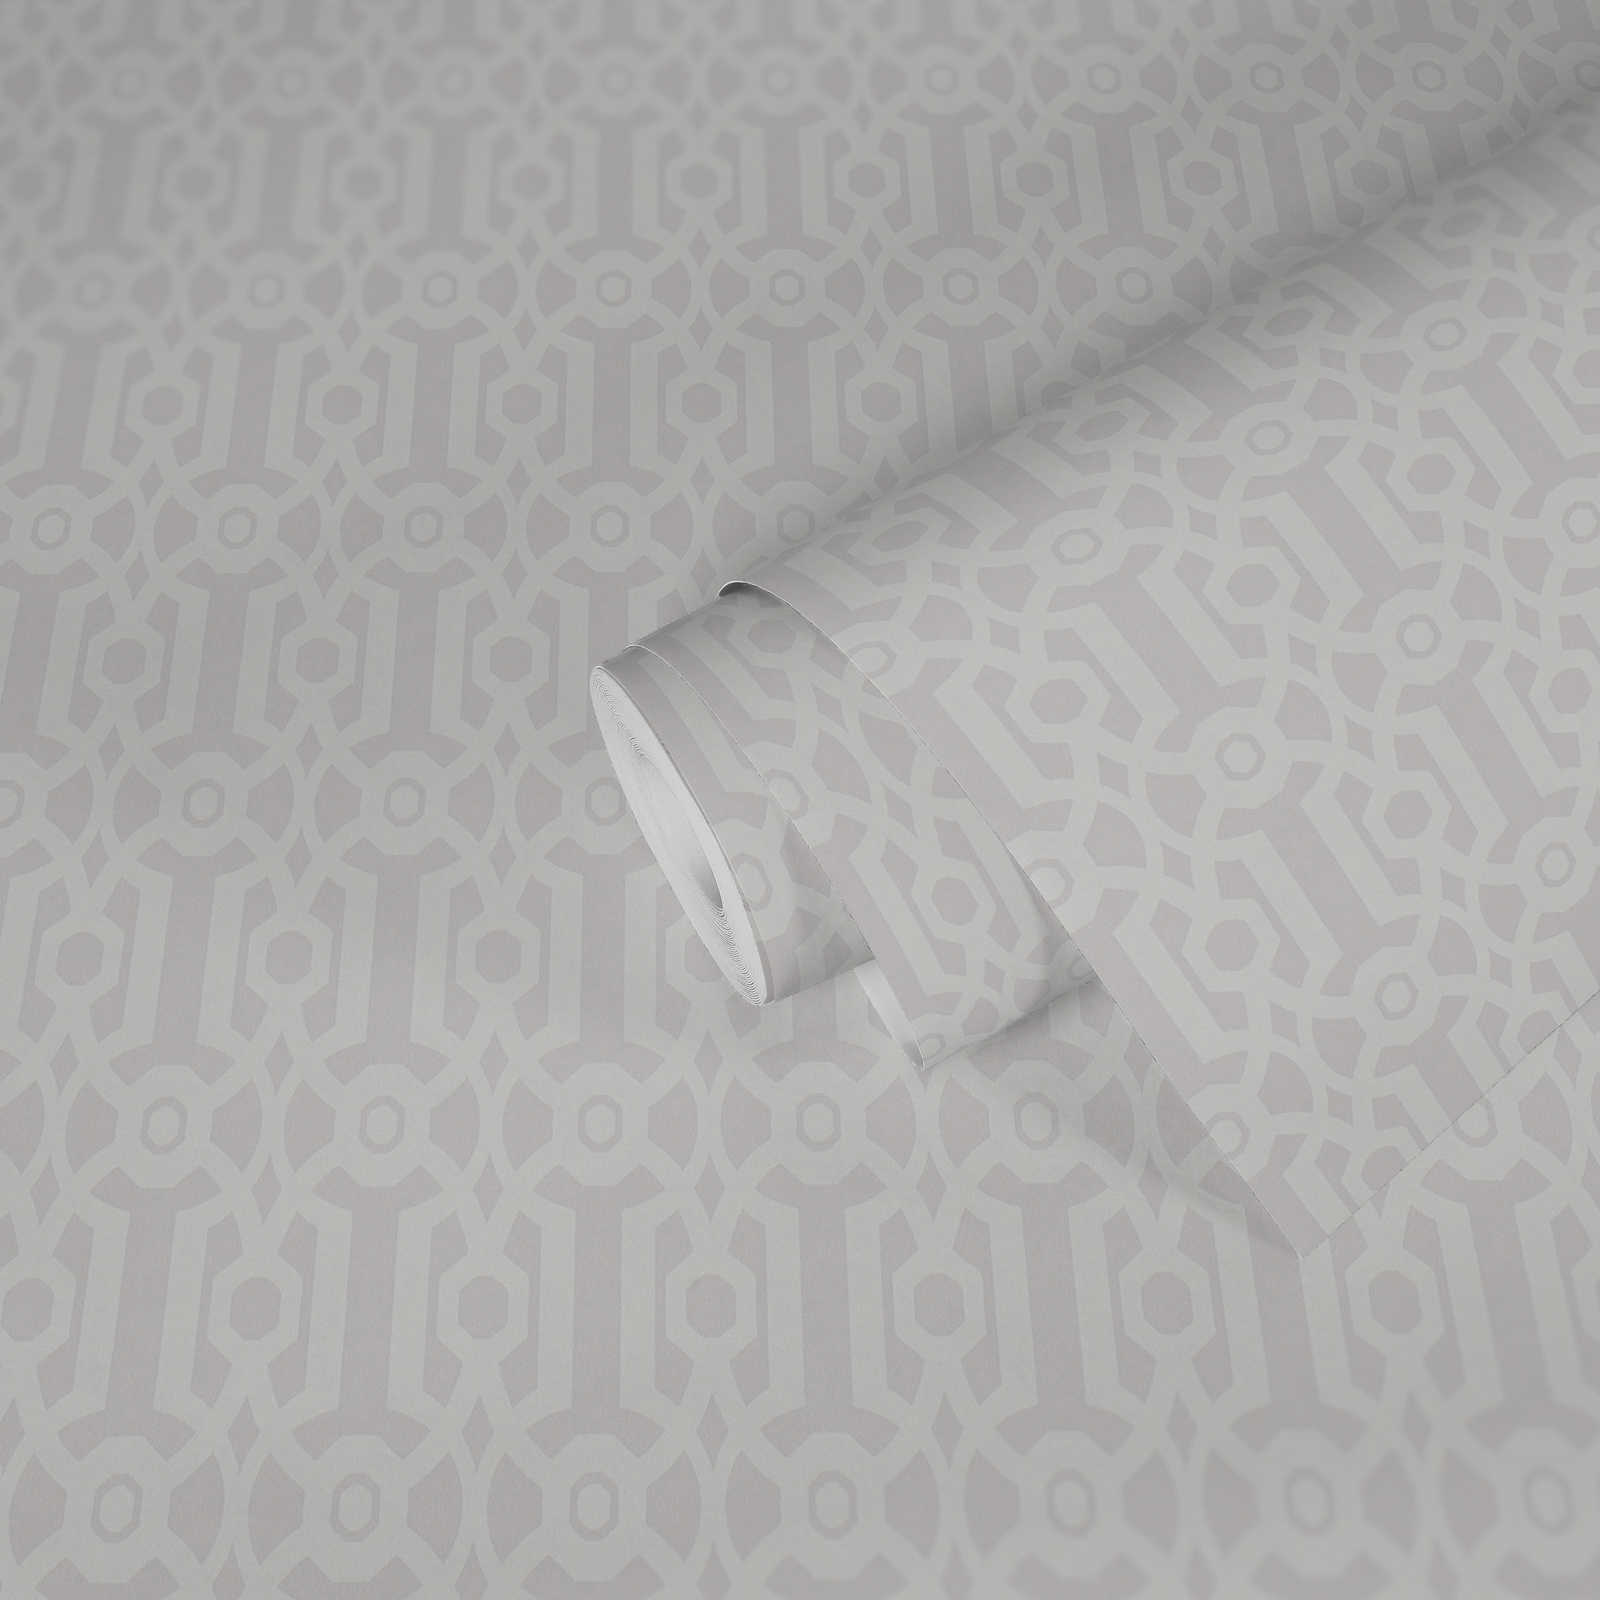             Graphic line pattern wallpaper - cream, grey
        